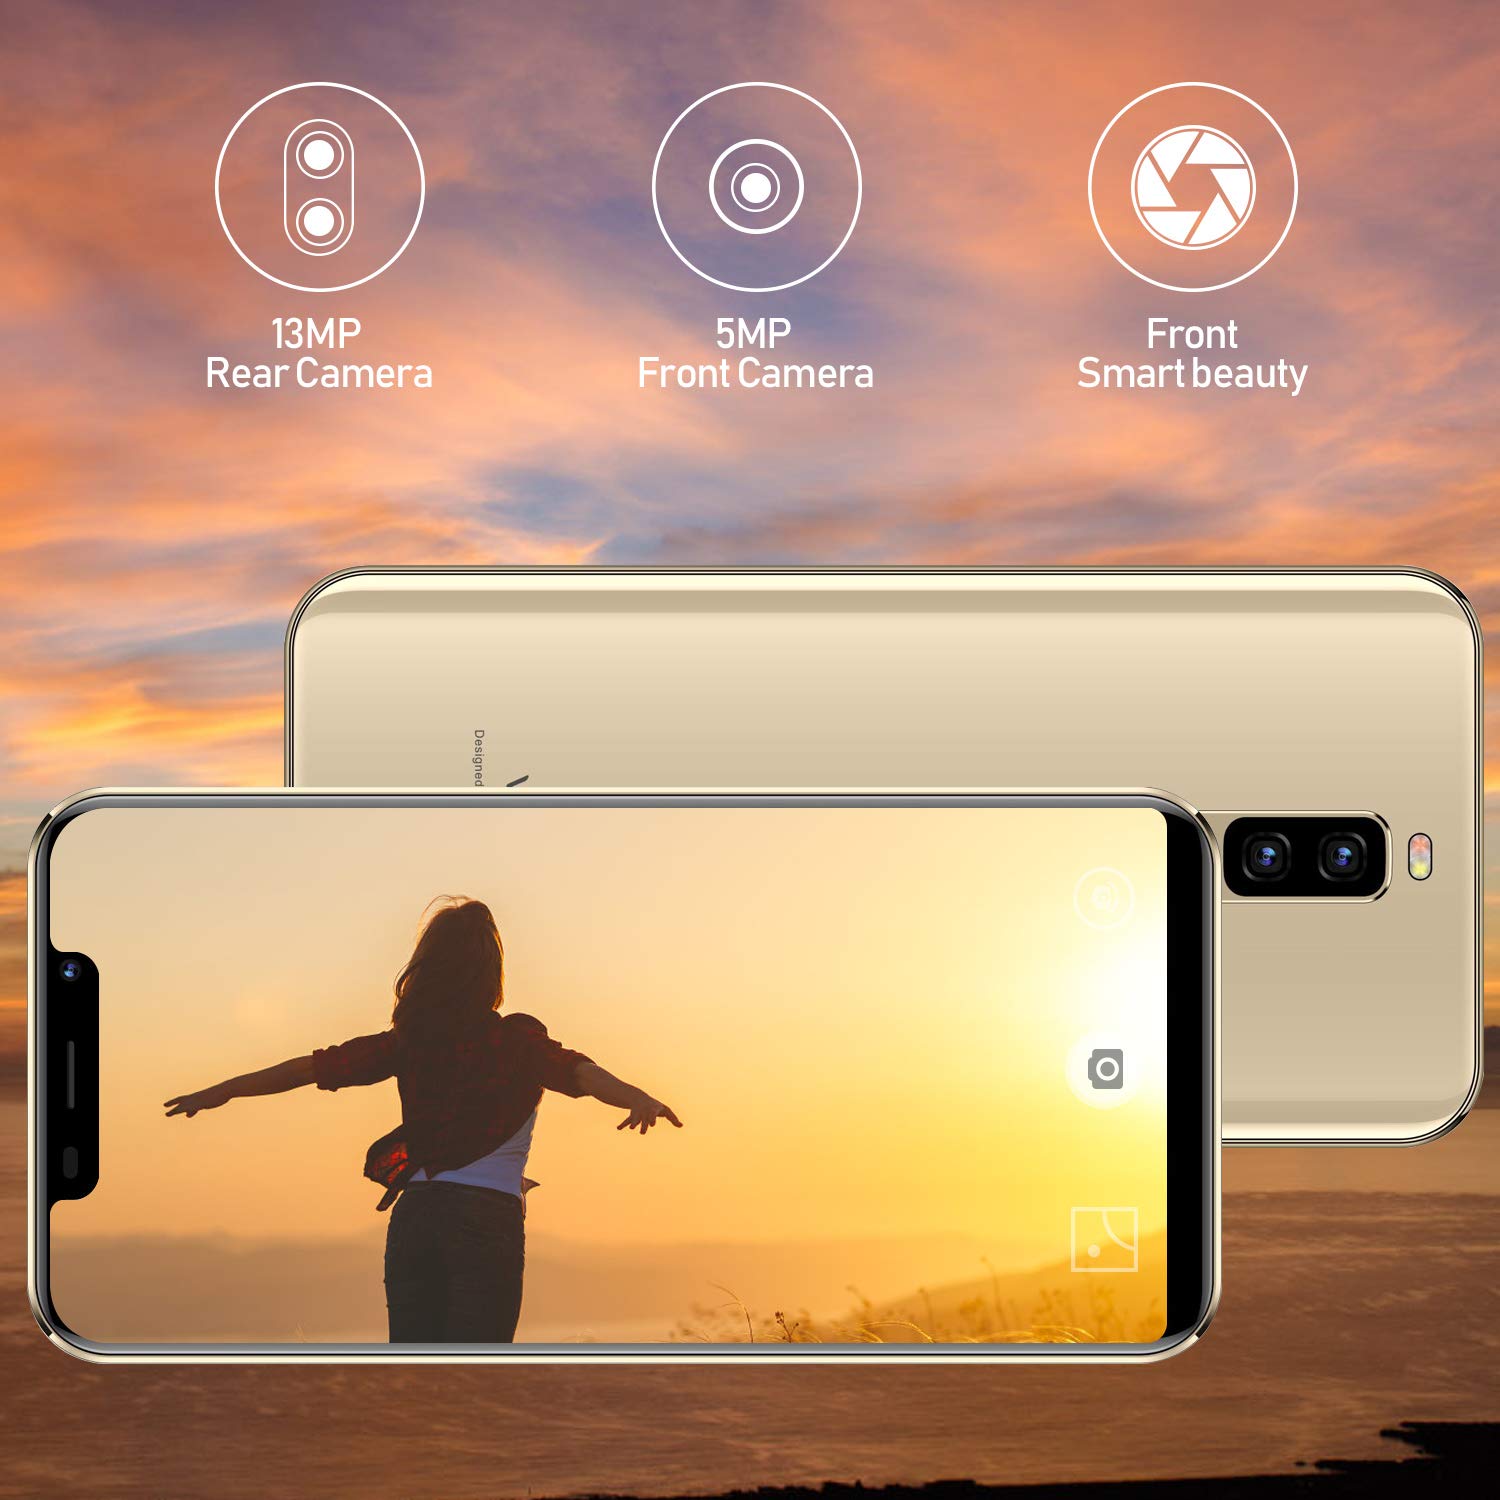 4G LTE TEENO VMobile S9 Mobile Phone Android 8.1 5.84 Full Screen